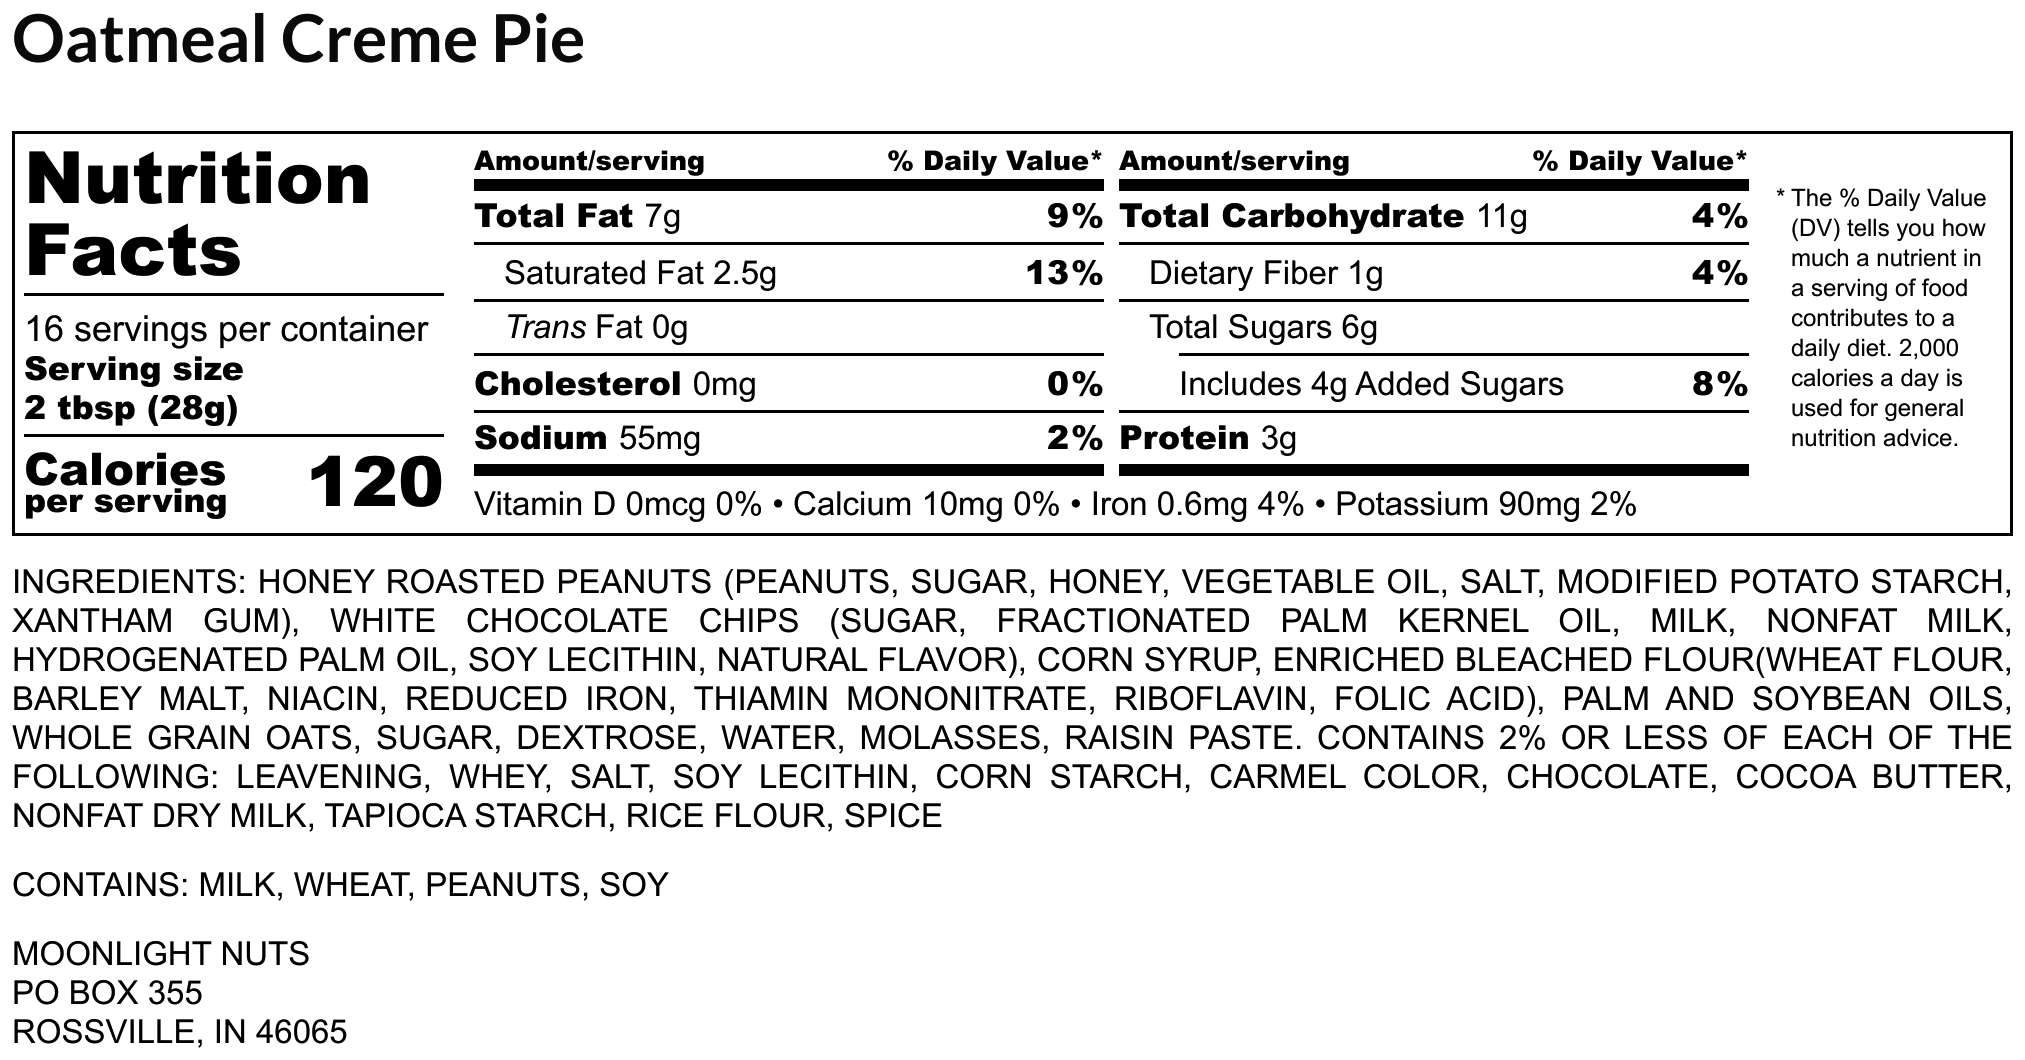 Oatmeal Crème Pie - Flavored Peanut Butter